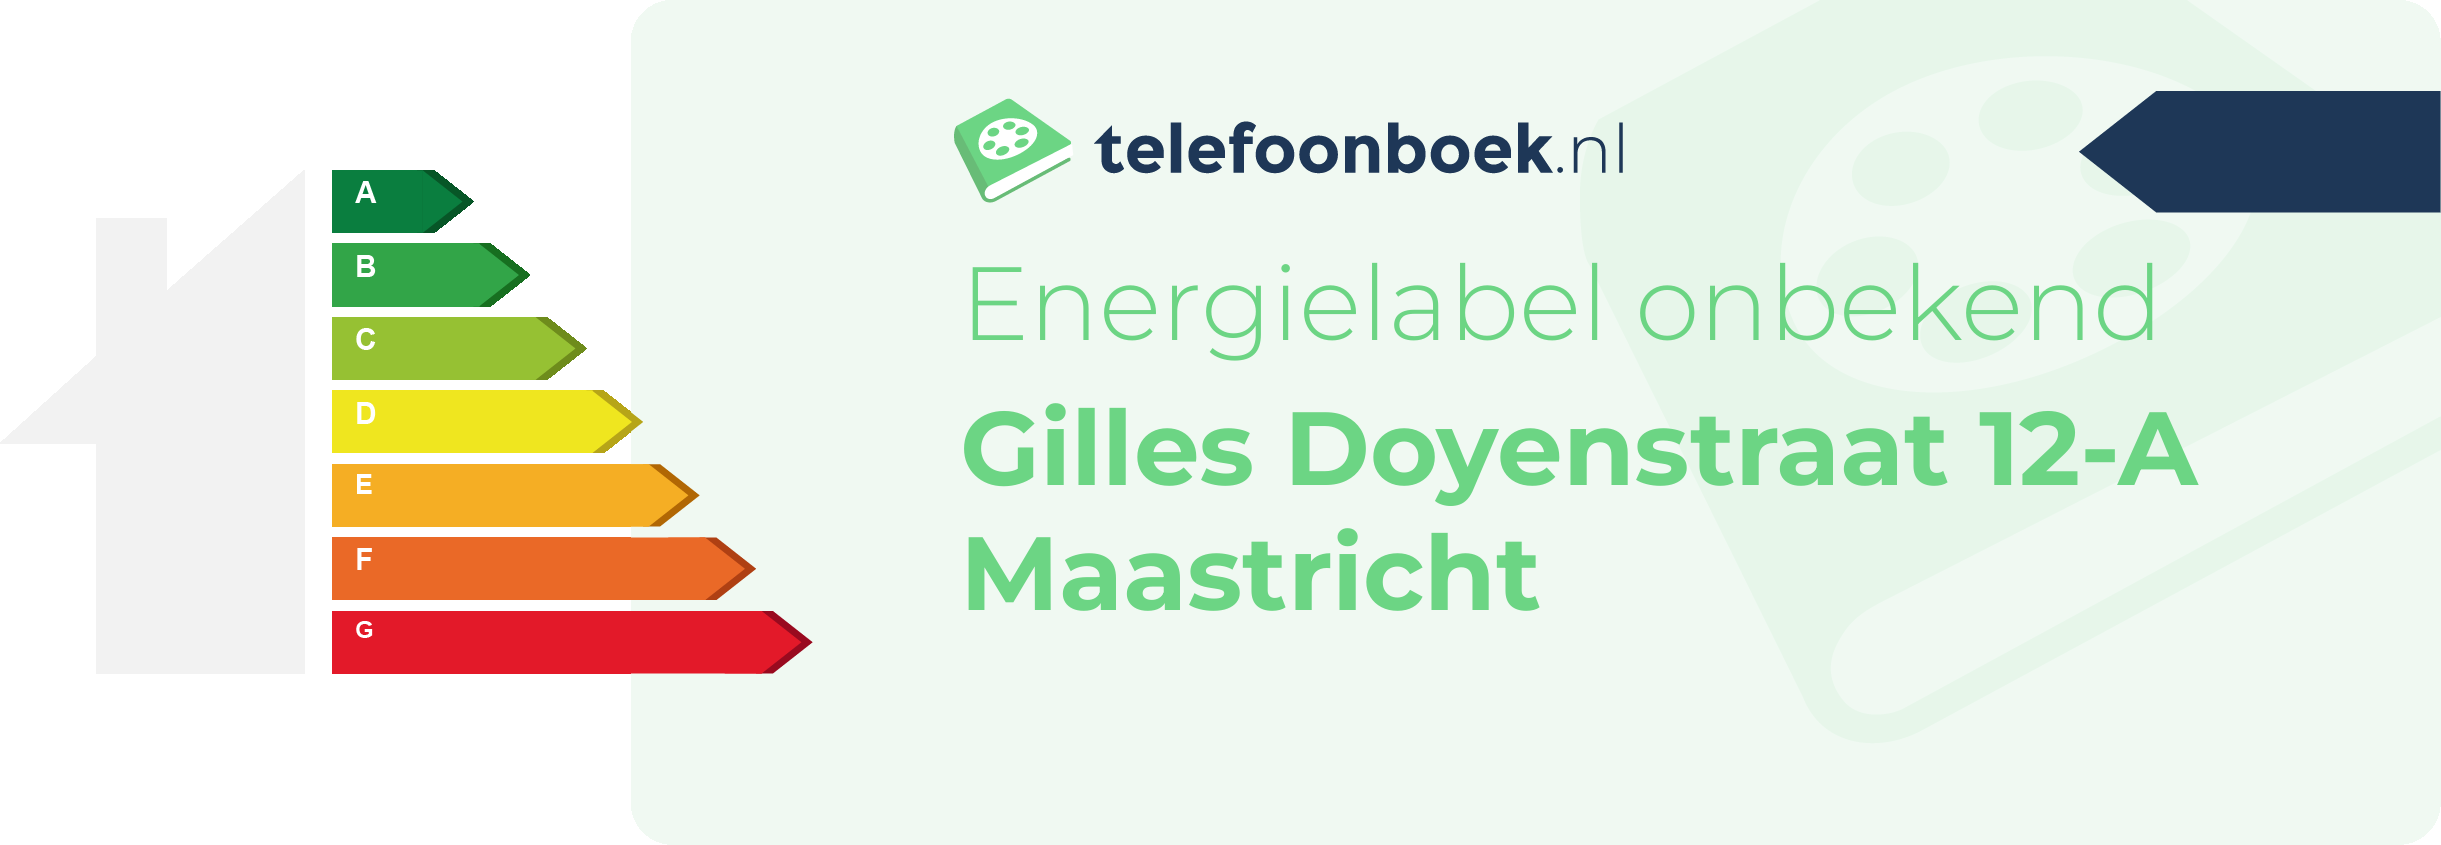 Energielabel Gilles Doyenstraat 12-A Maastricht